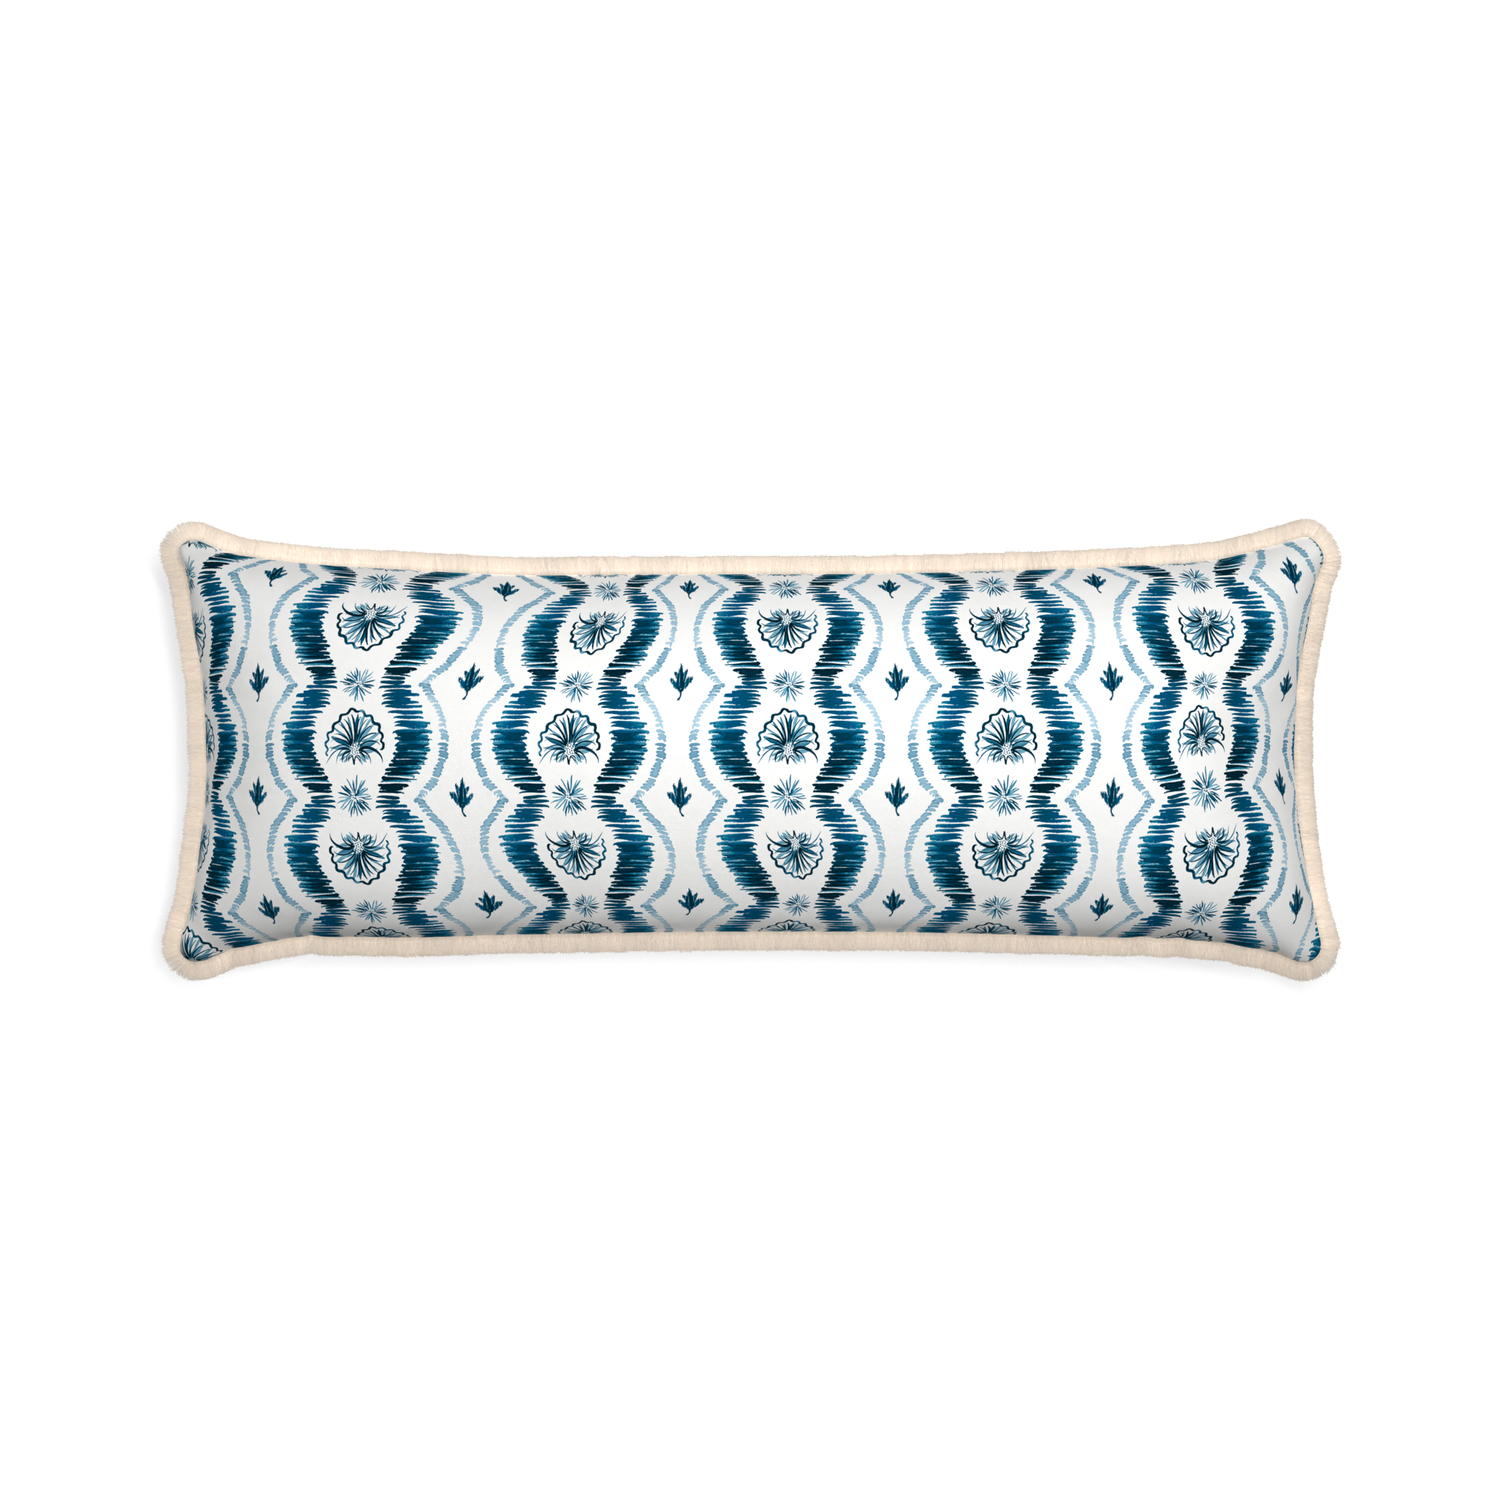 Xl-lumbar alice custom pillow with cream fringe on white background